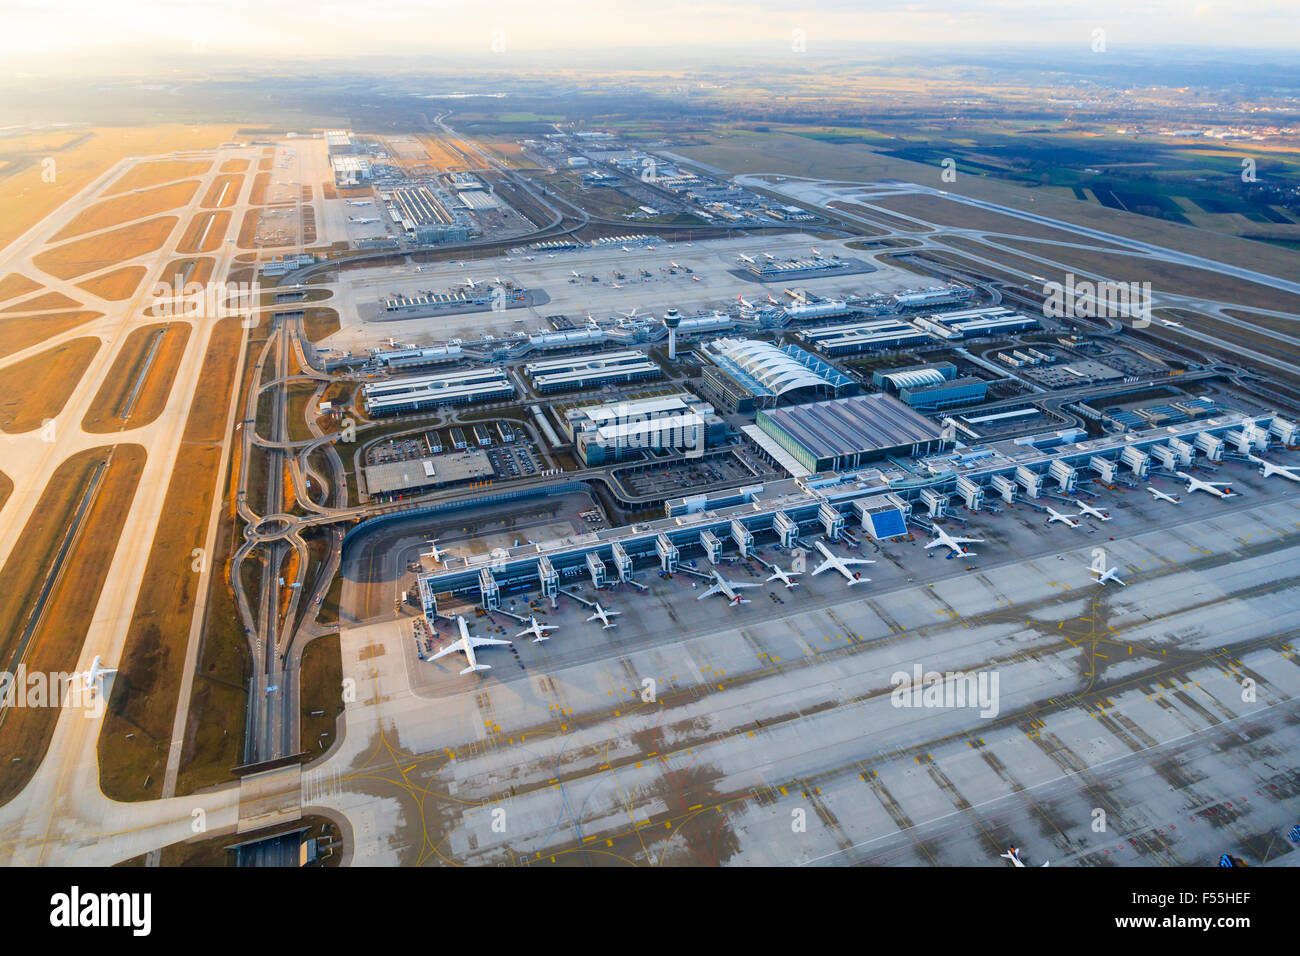 Gerany, Munich, Franz-Josef-Strauss International Airport Stock Photo